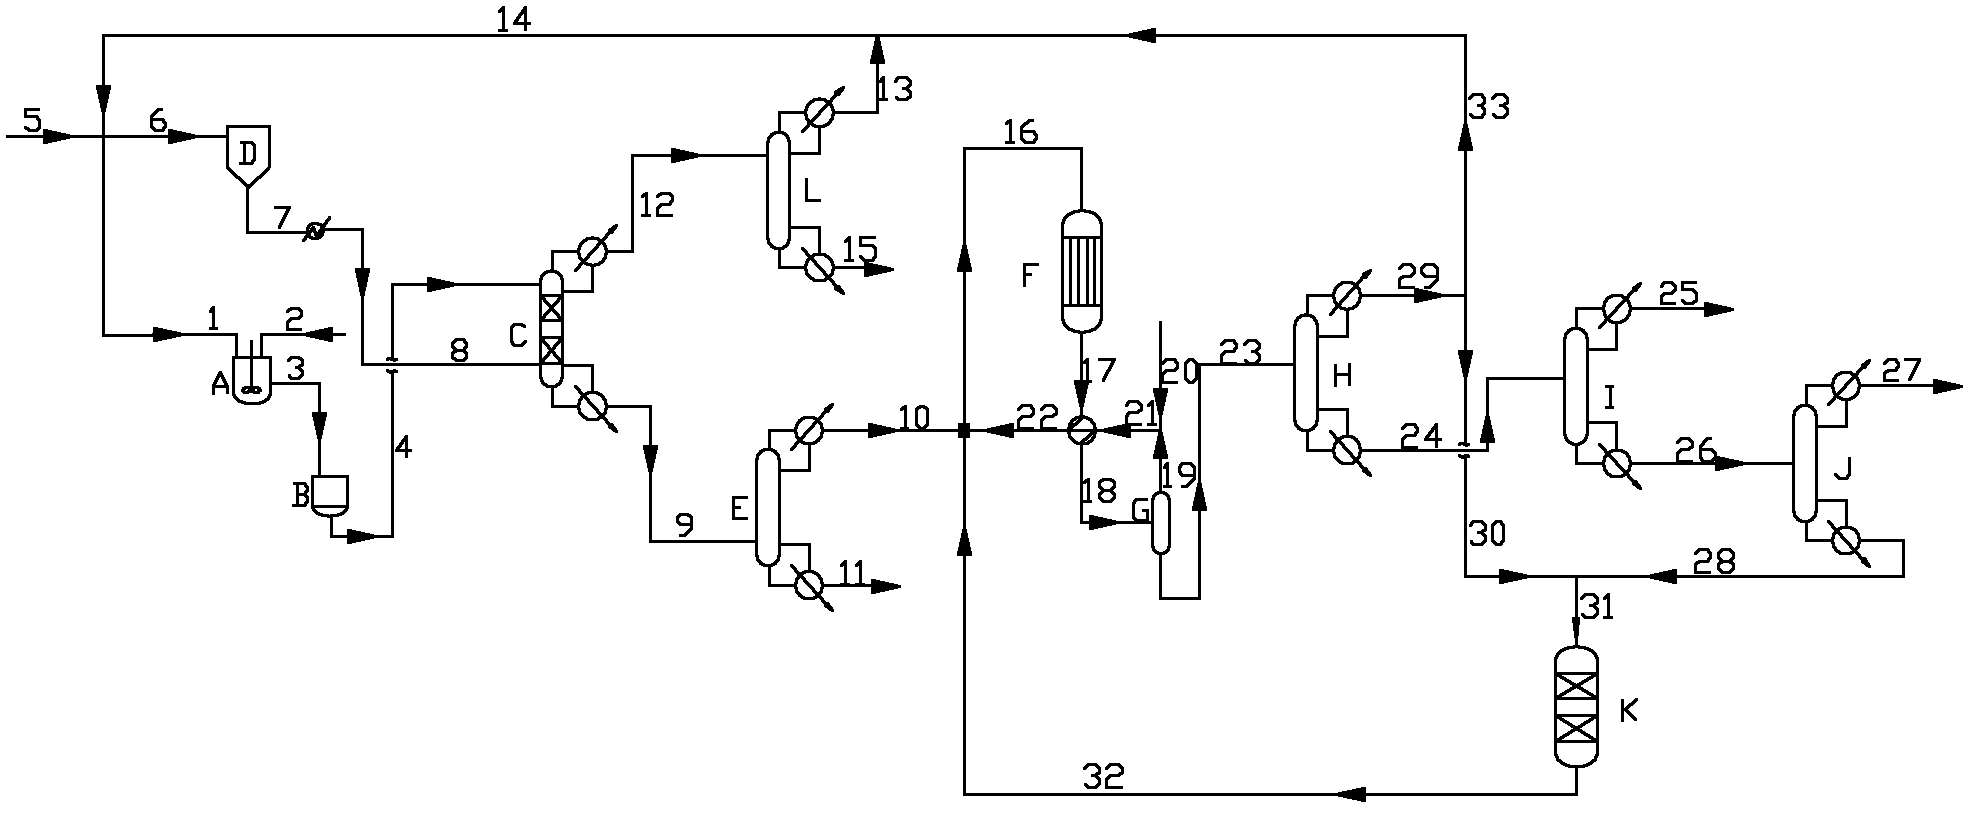 Process for producing 1,6-hexanediol and coproducing epsilon-caprolactone